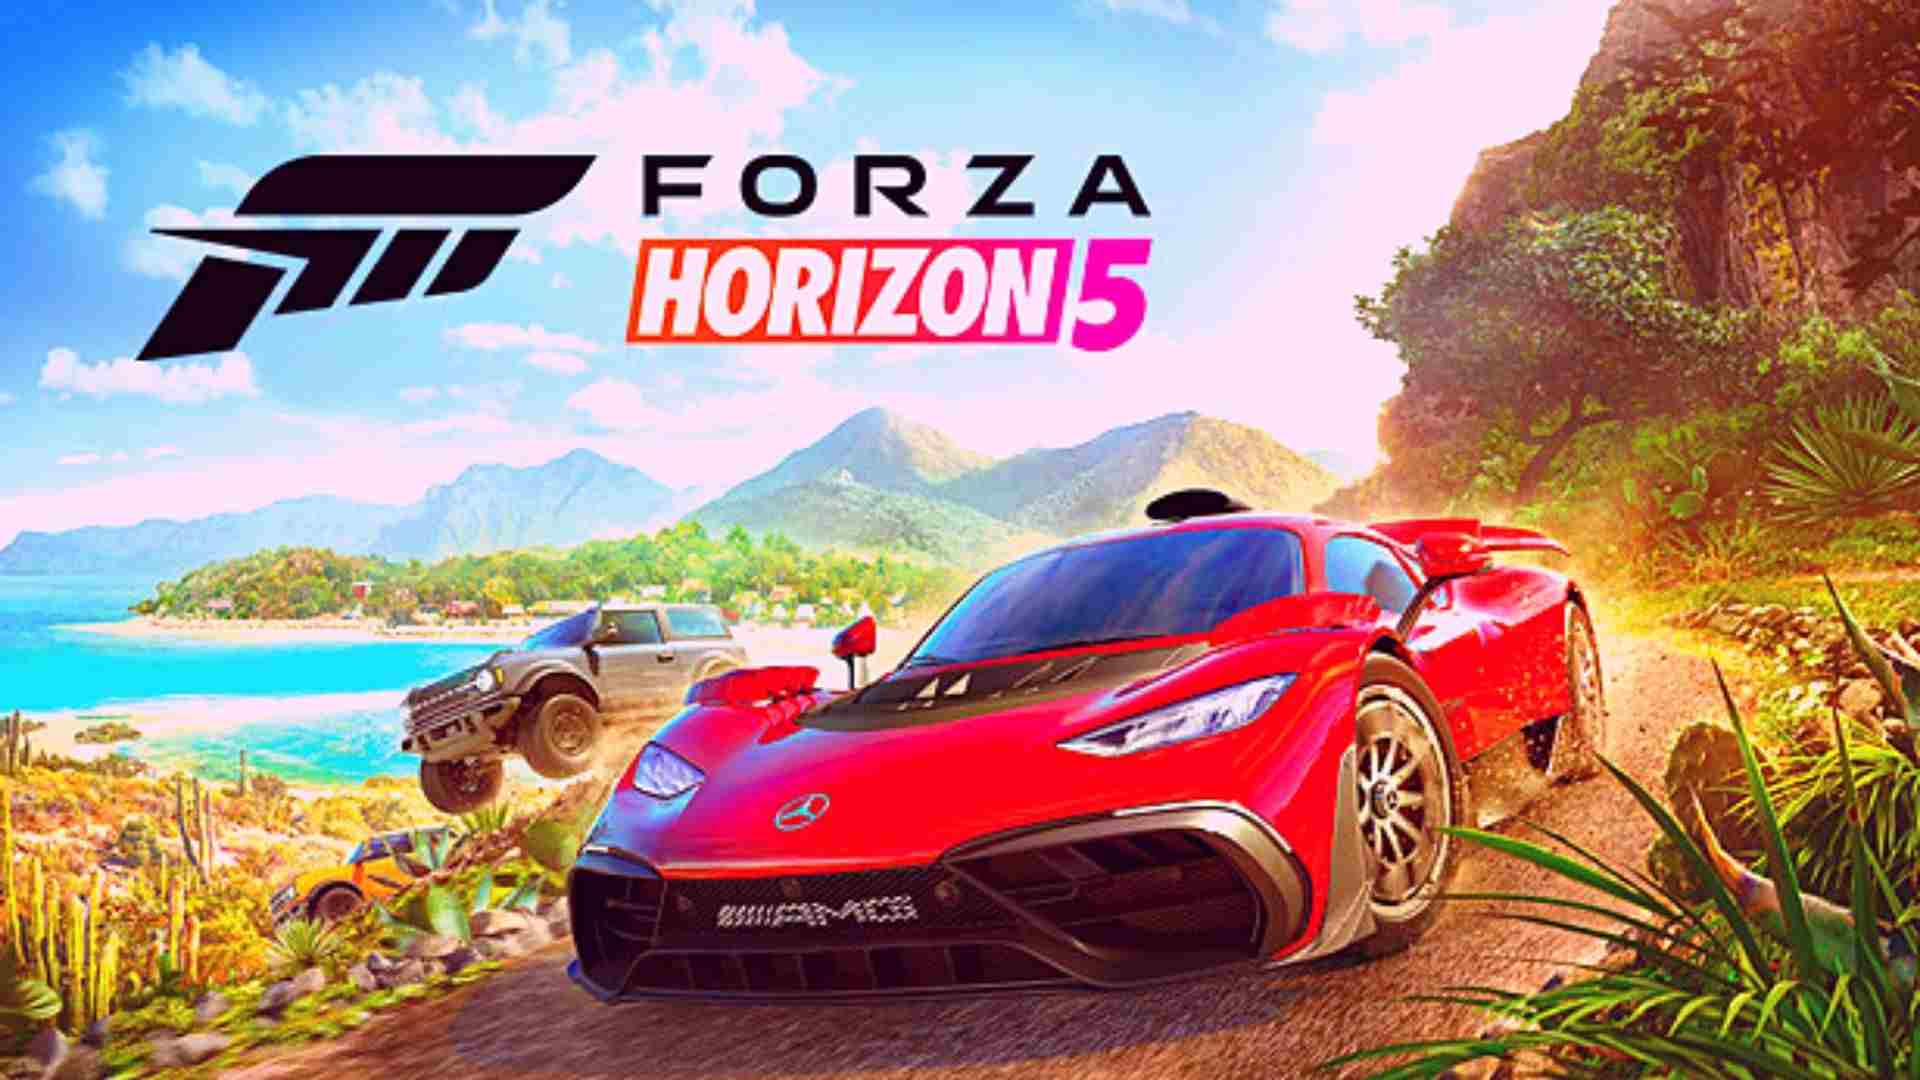 Forza Horizon 5 Parents Guide | Forza Horizon 5 Age Rating